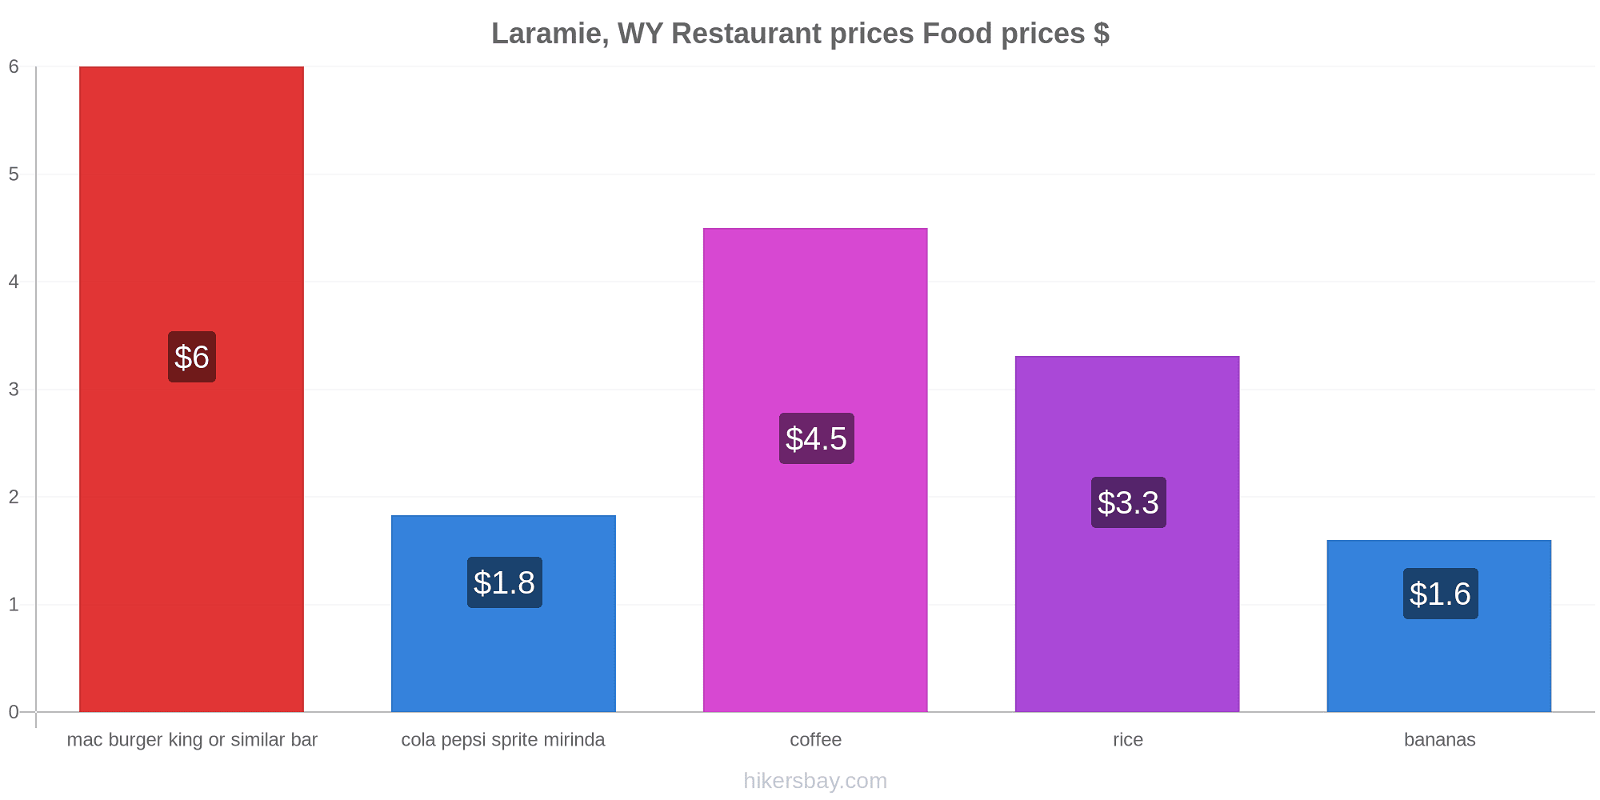 Laramie, WY price changes hikersbay.com